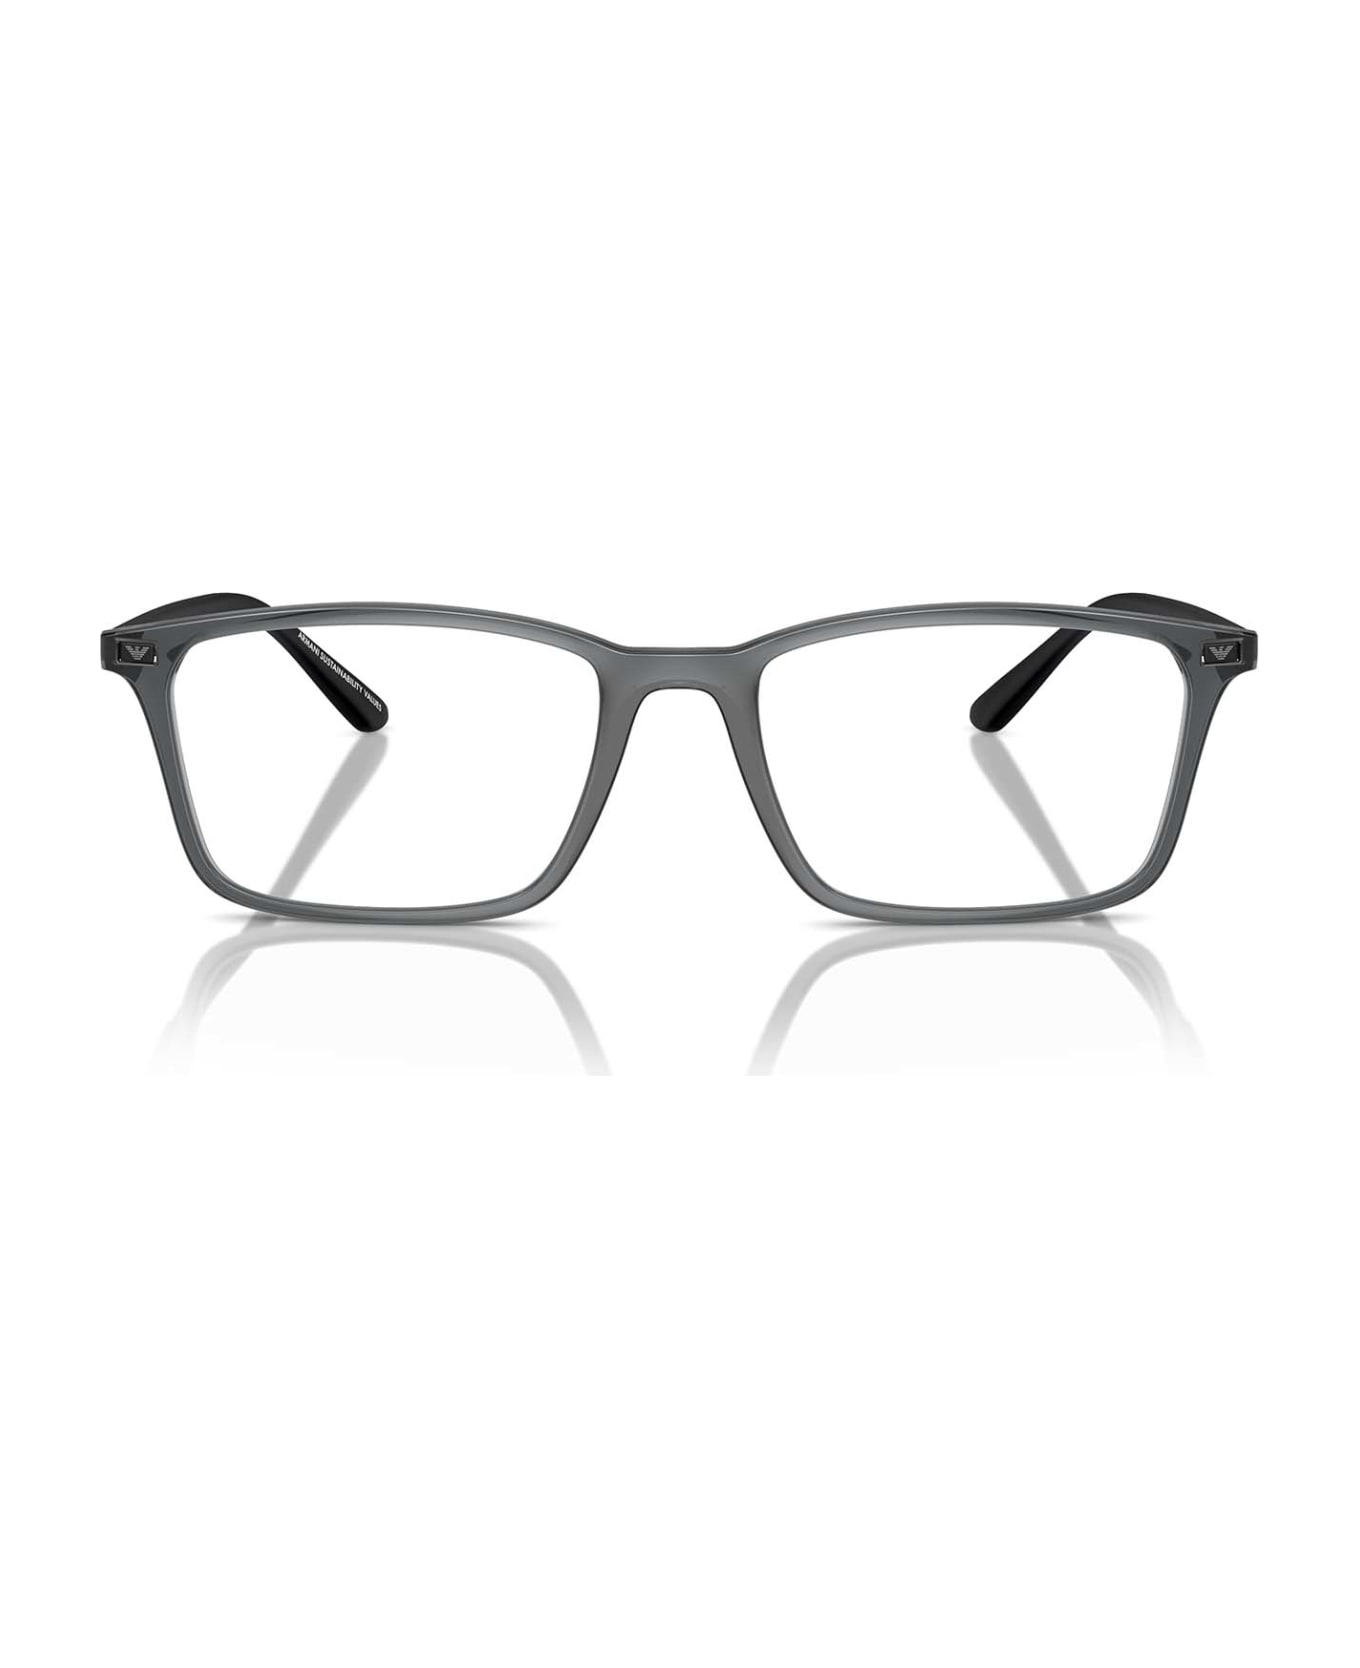 Emporio Armani Ea3237 Shiny Transparent Black Glasses - Shiny Transparent Black アイウェア